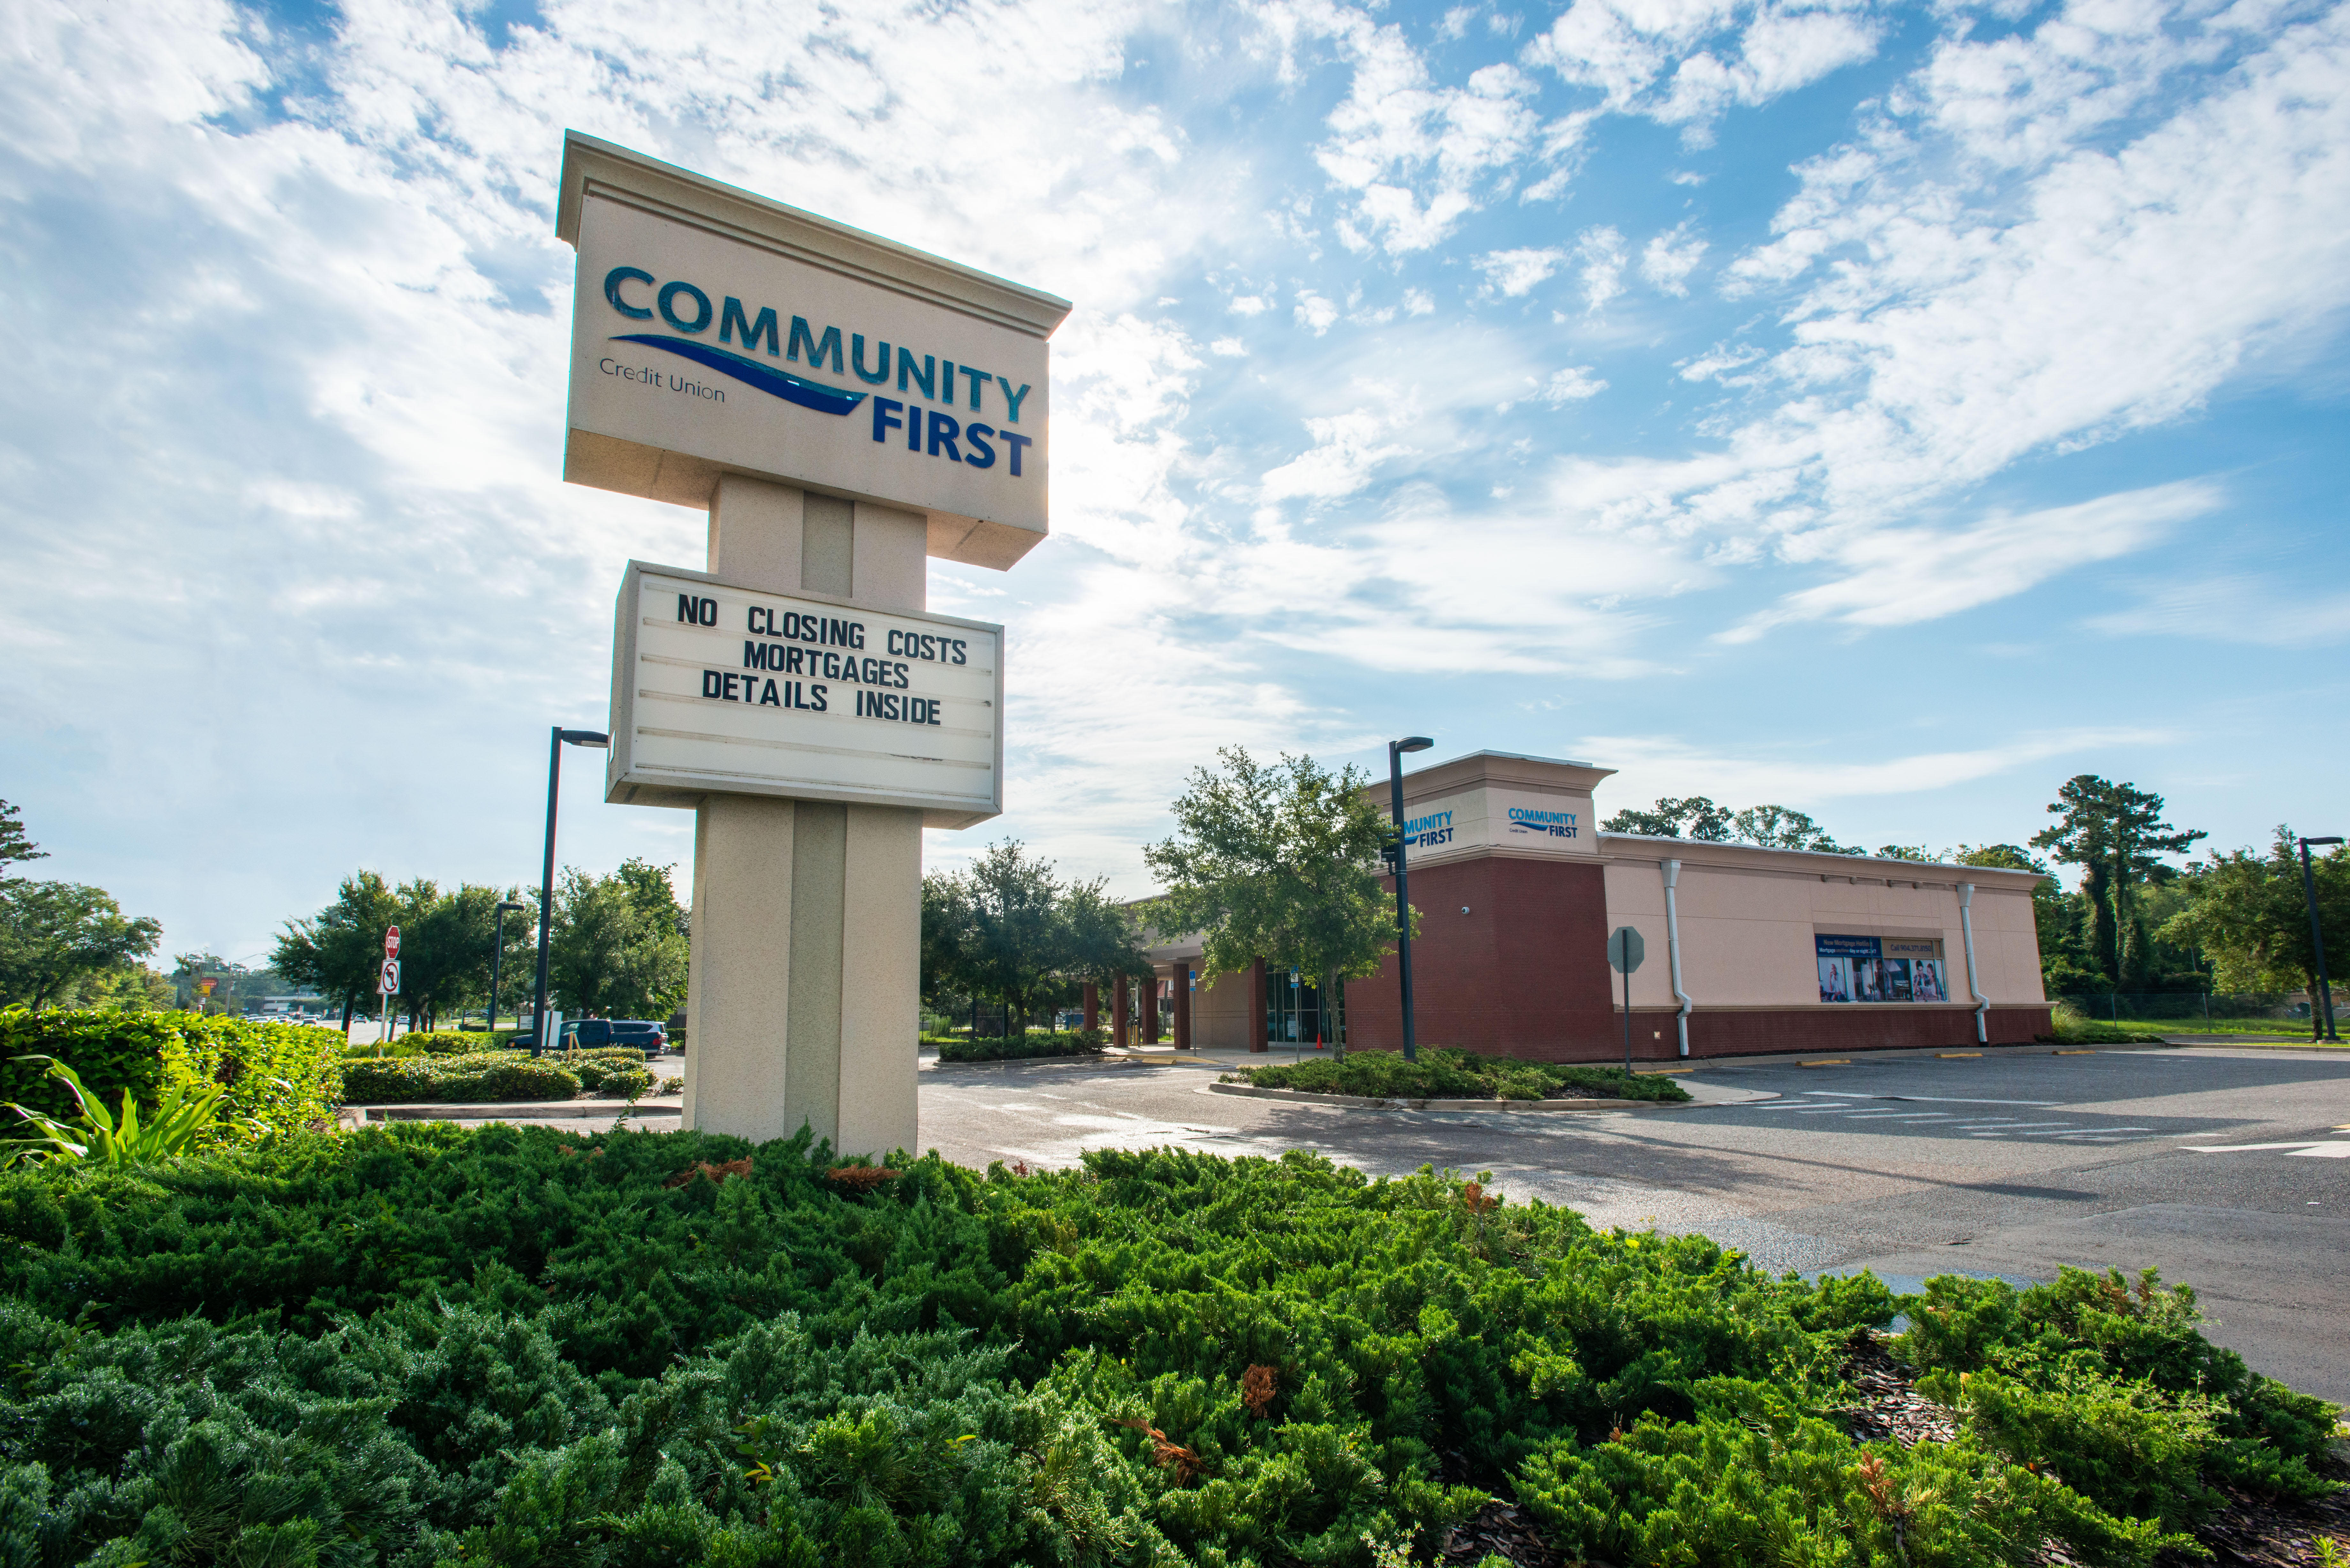 Community First Credit Union Photo